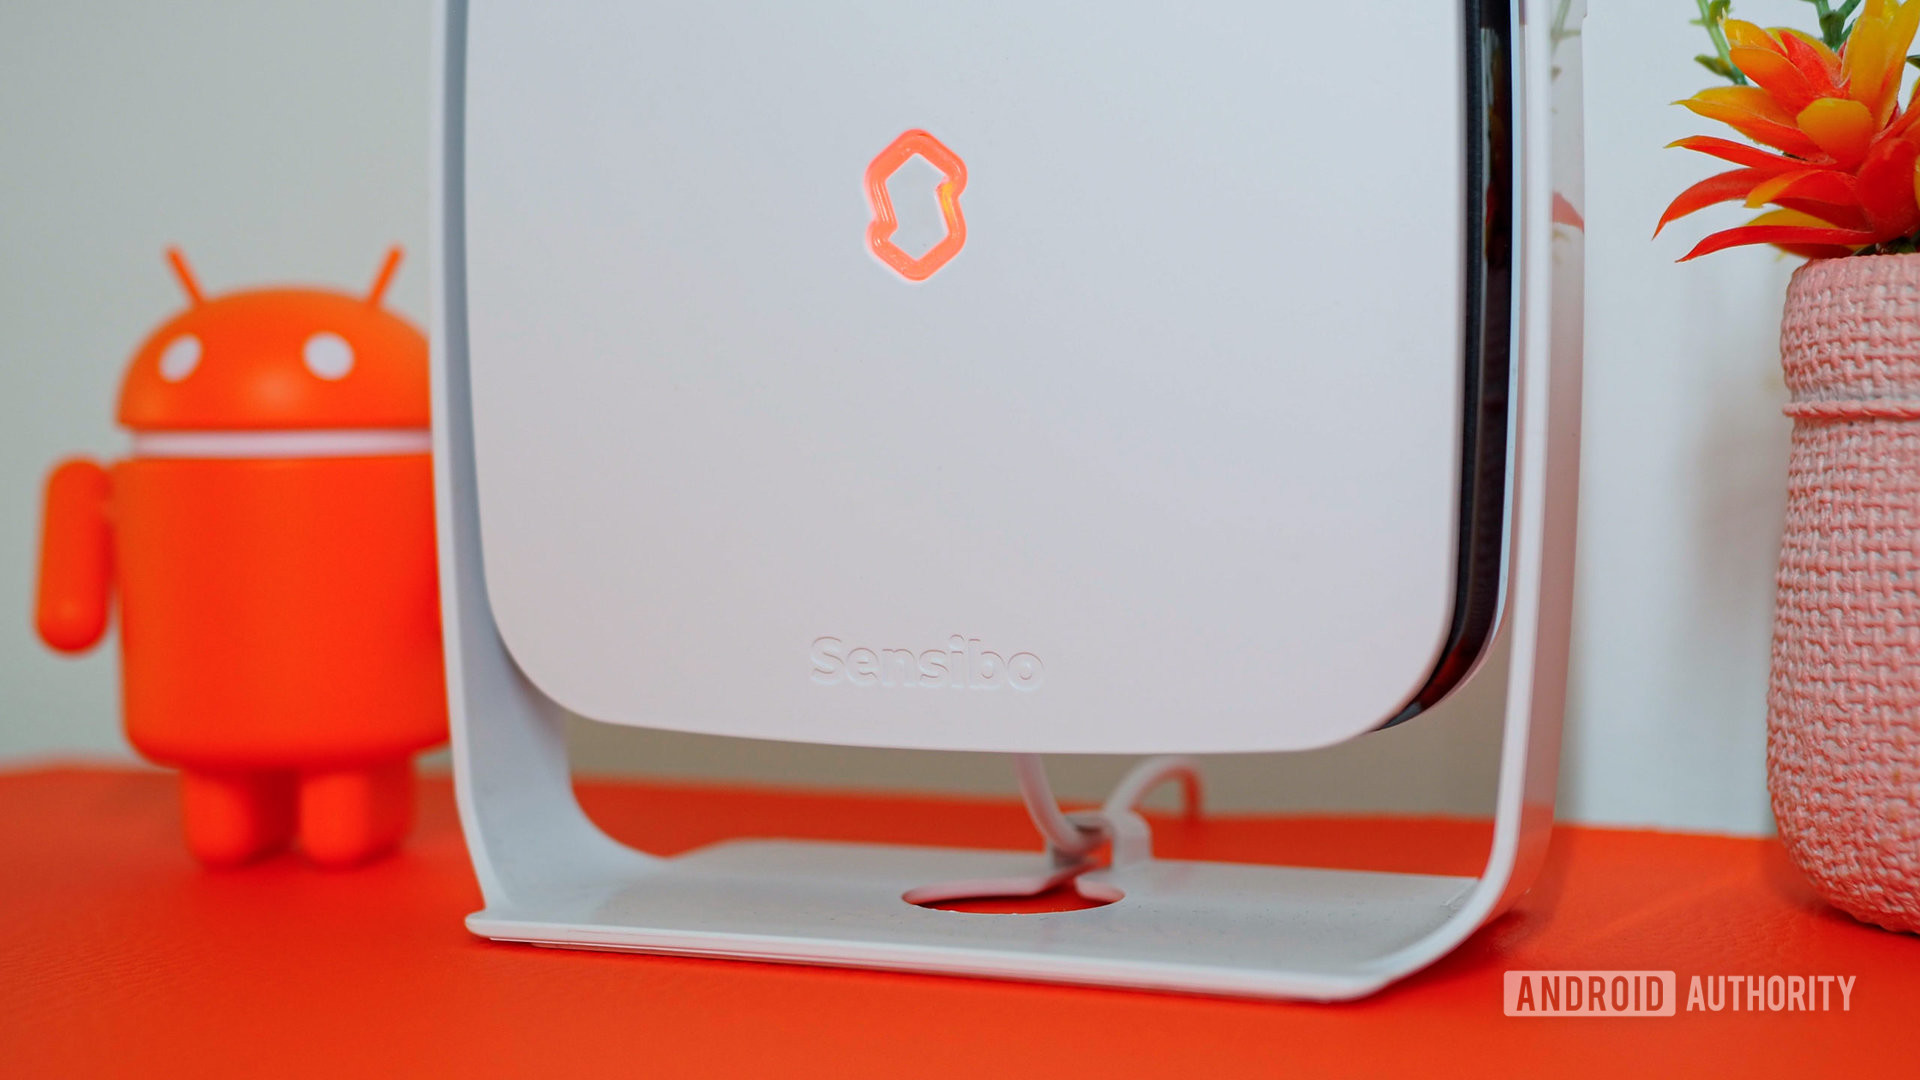 sensibo elements air quality monitor showing orange light for average air